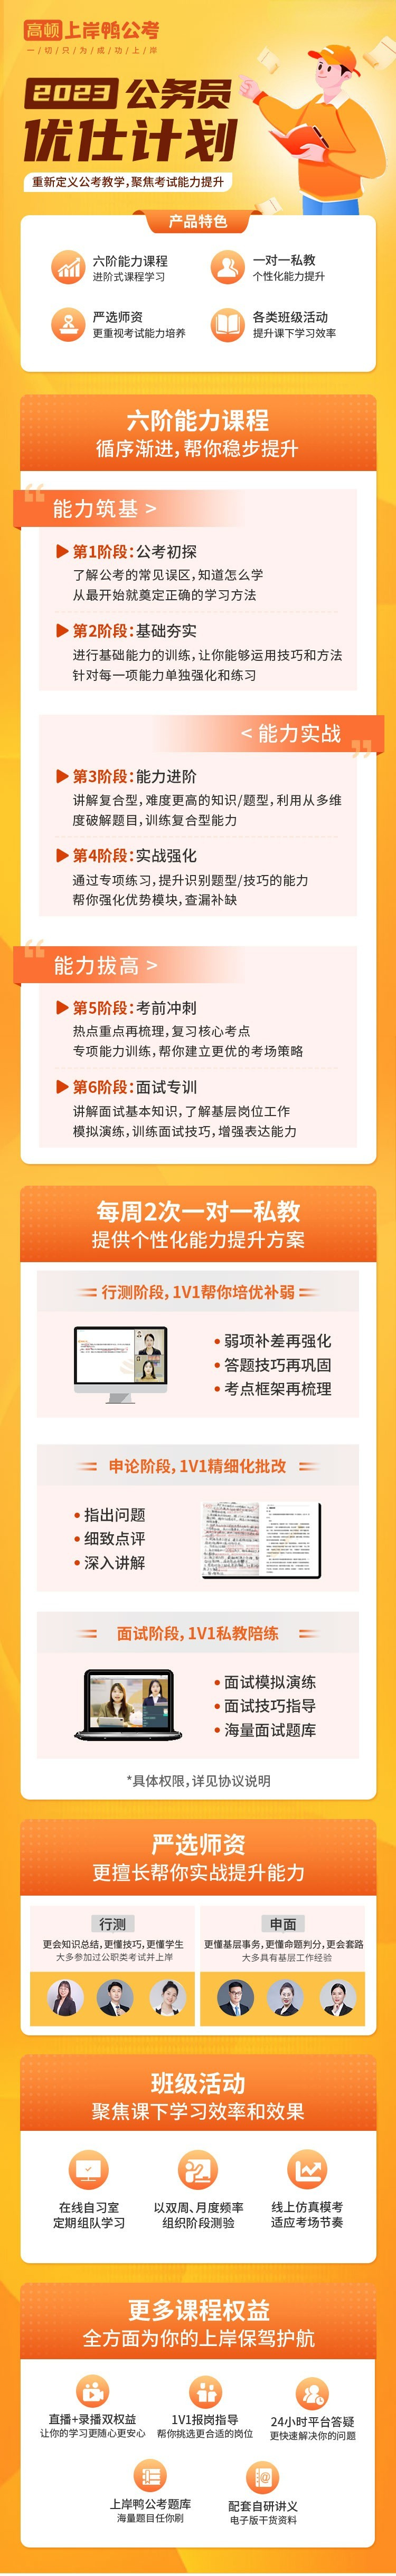 https://simg01.gaodunwangxiao.com/uploadfiles/product-center/202208/11/23379_20220811114625.jpg